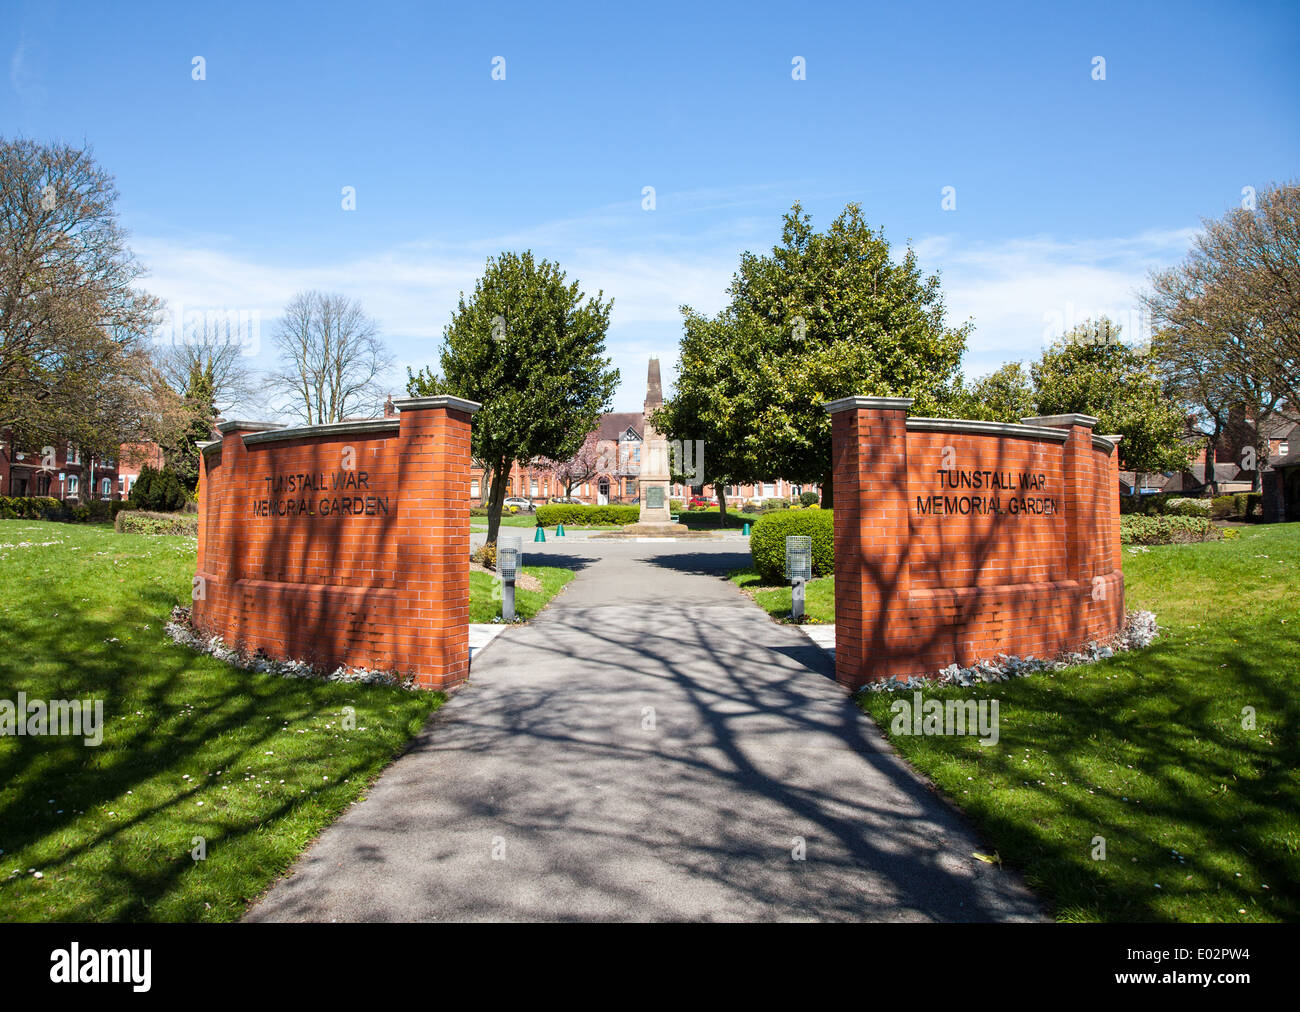 Tunstall war memorial garden park Stoke on Trent Staffordshire England UK Stock Photo